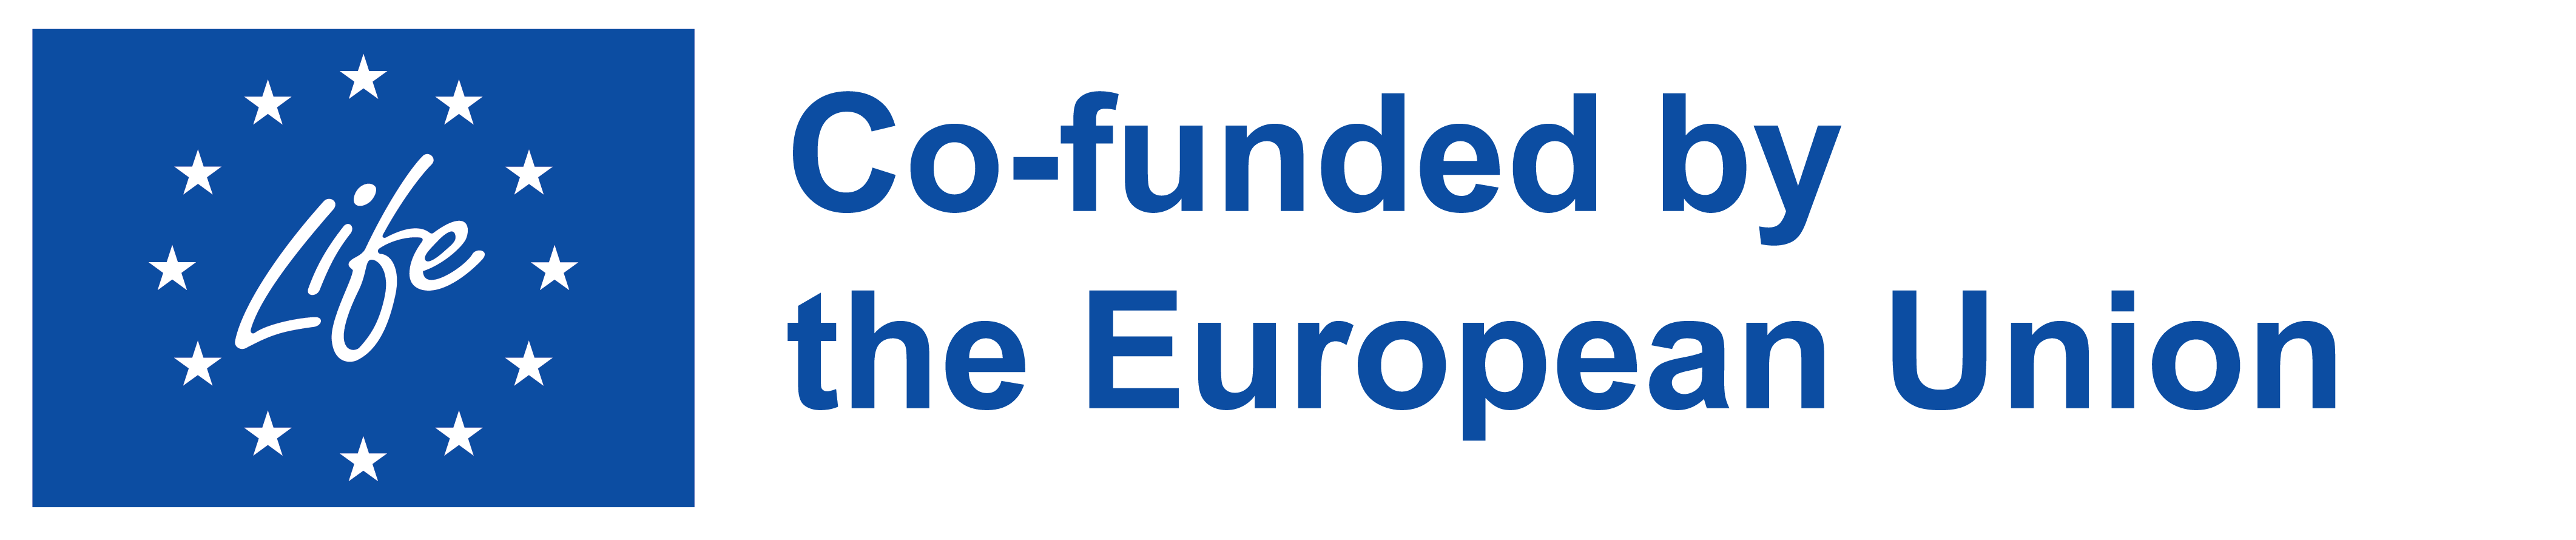 EN Co-funded by the EU_PANTONE (2)